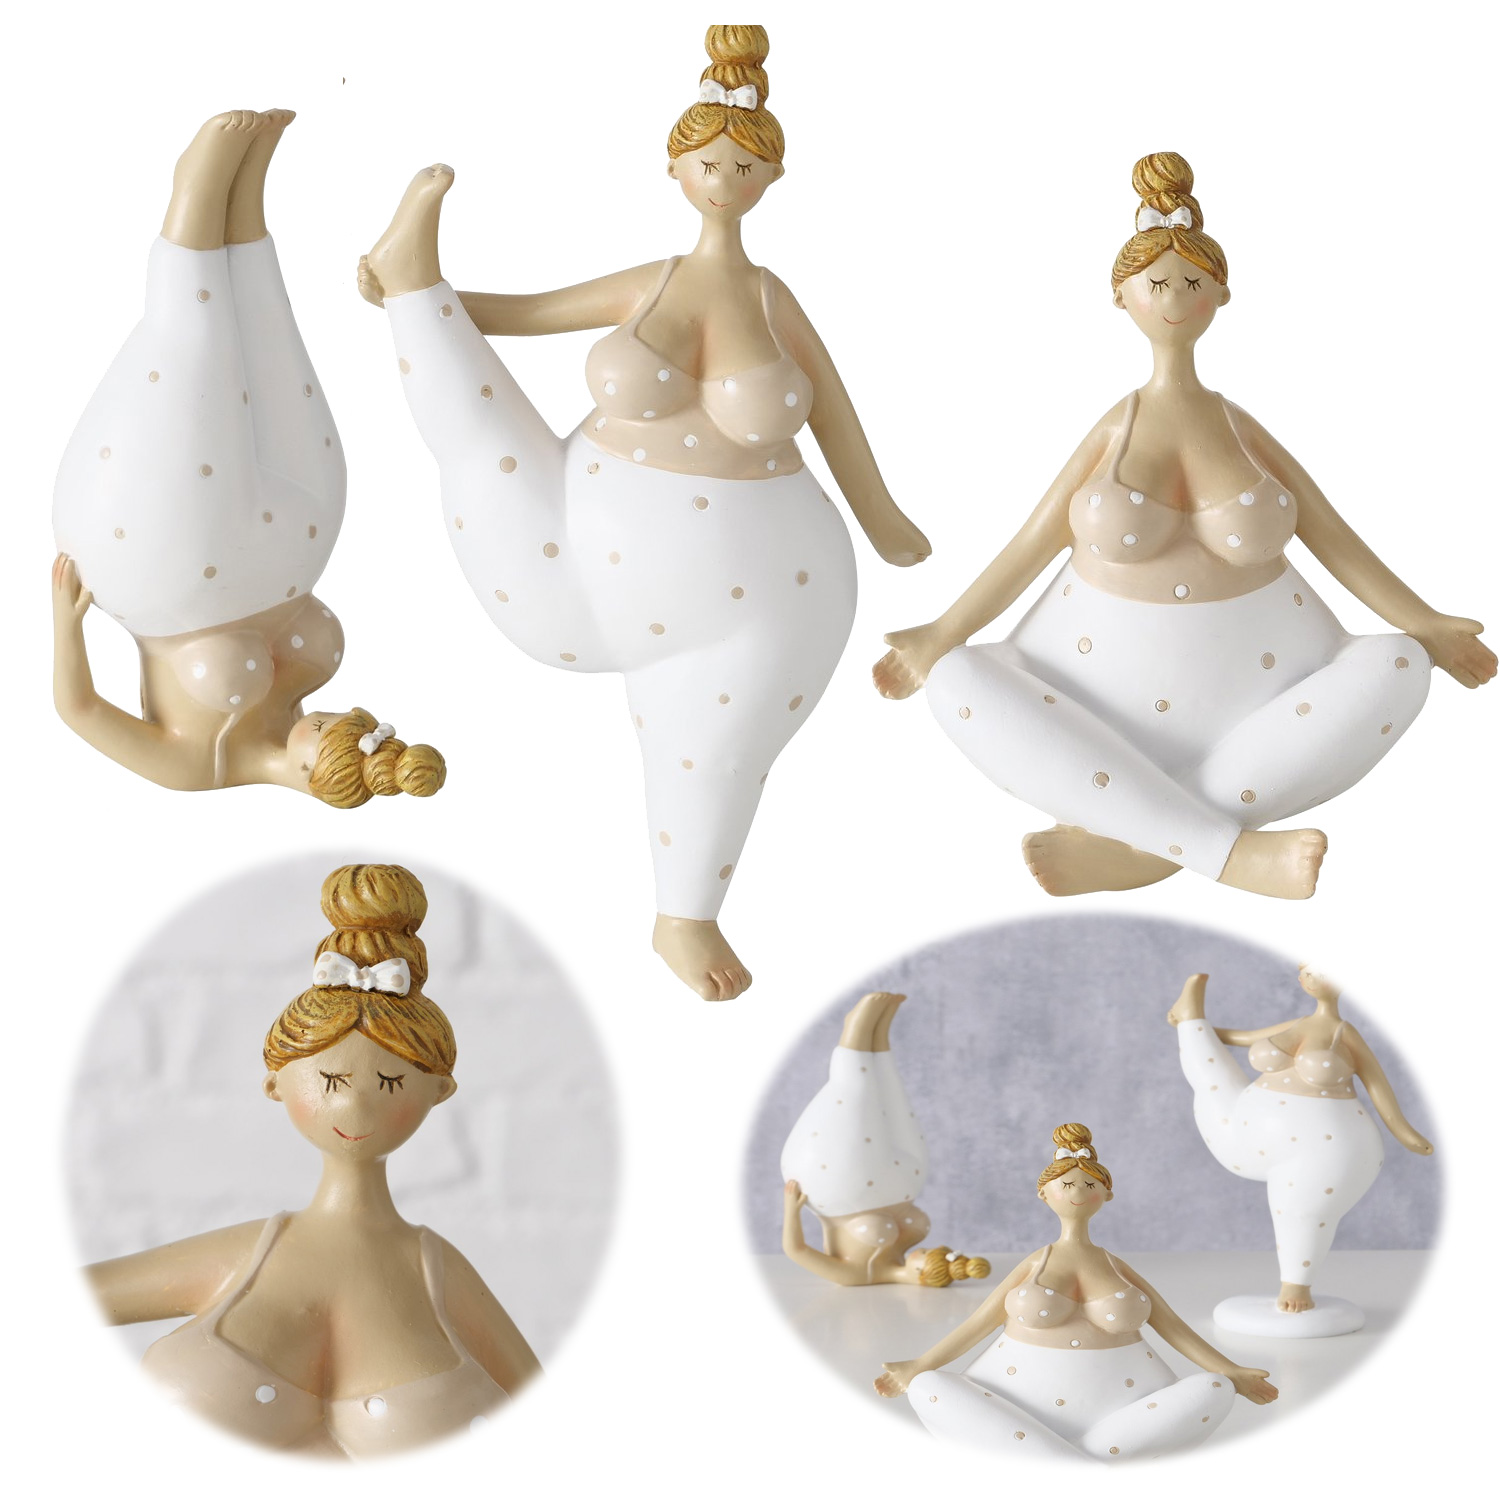 LS-LebenStil 3 Yoga Deko-Figur Set Frauen